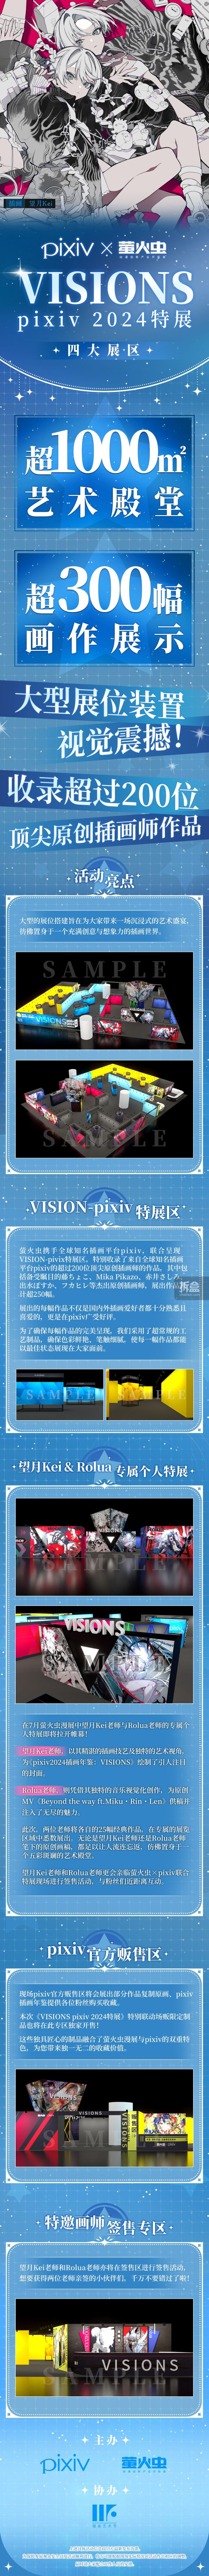 pixiv × 萤火虫联合呈现 —— VISIONS pixiv 2024特展